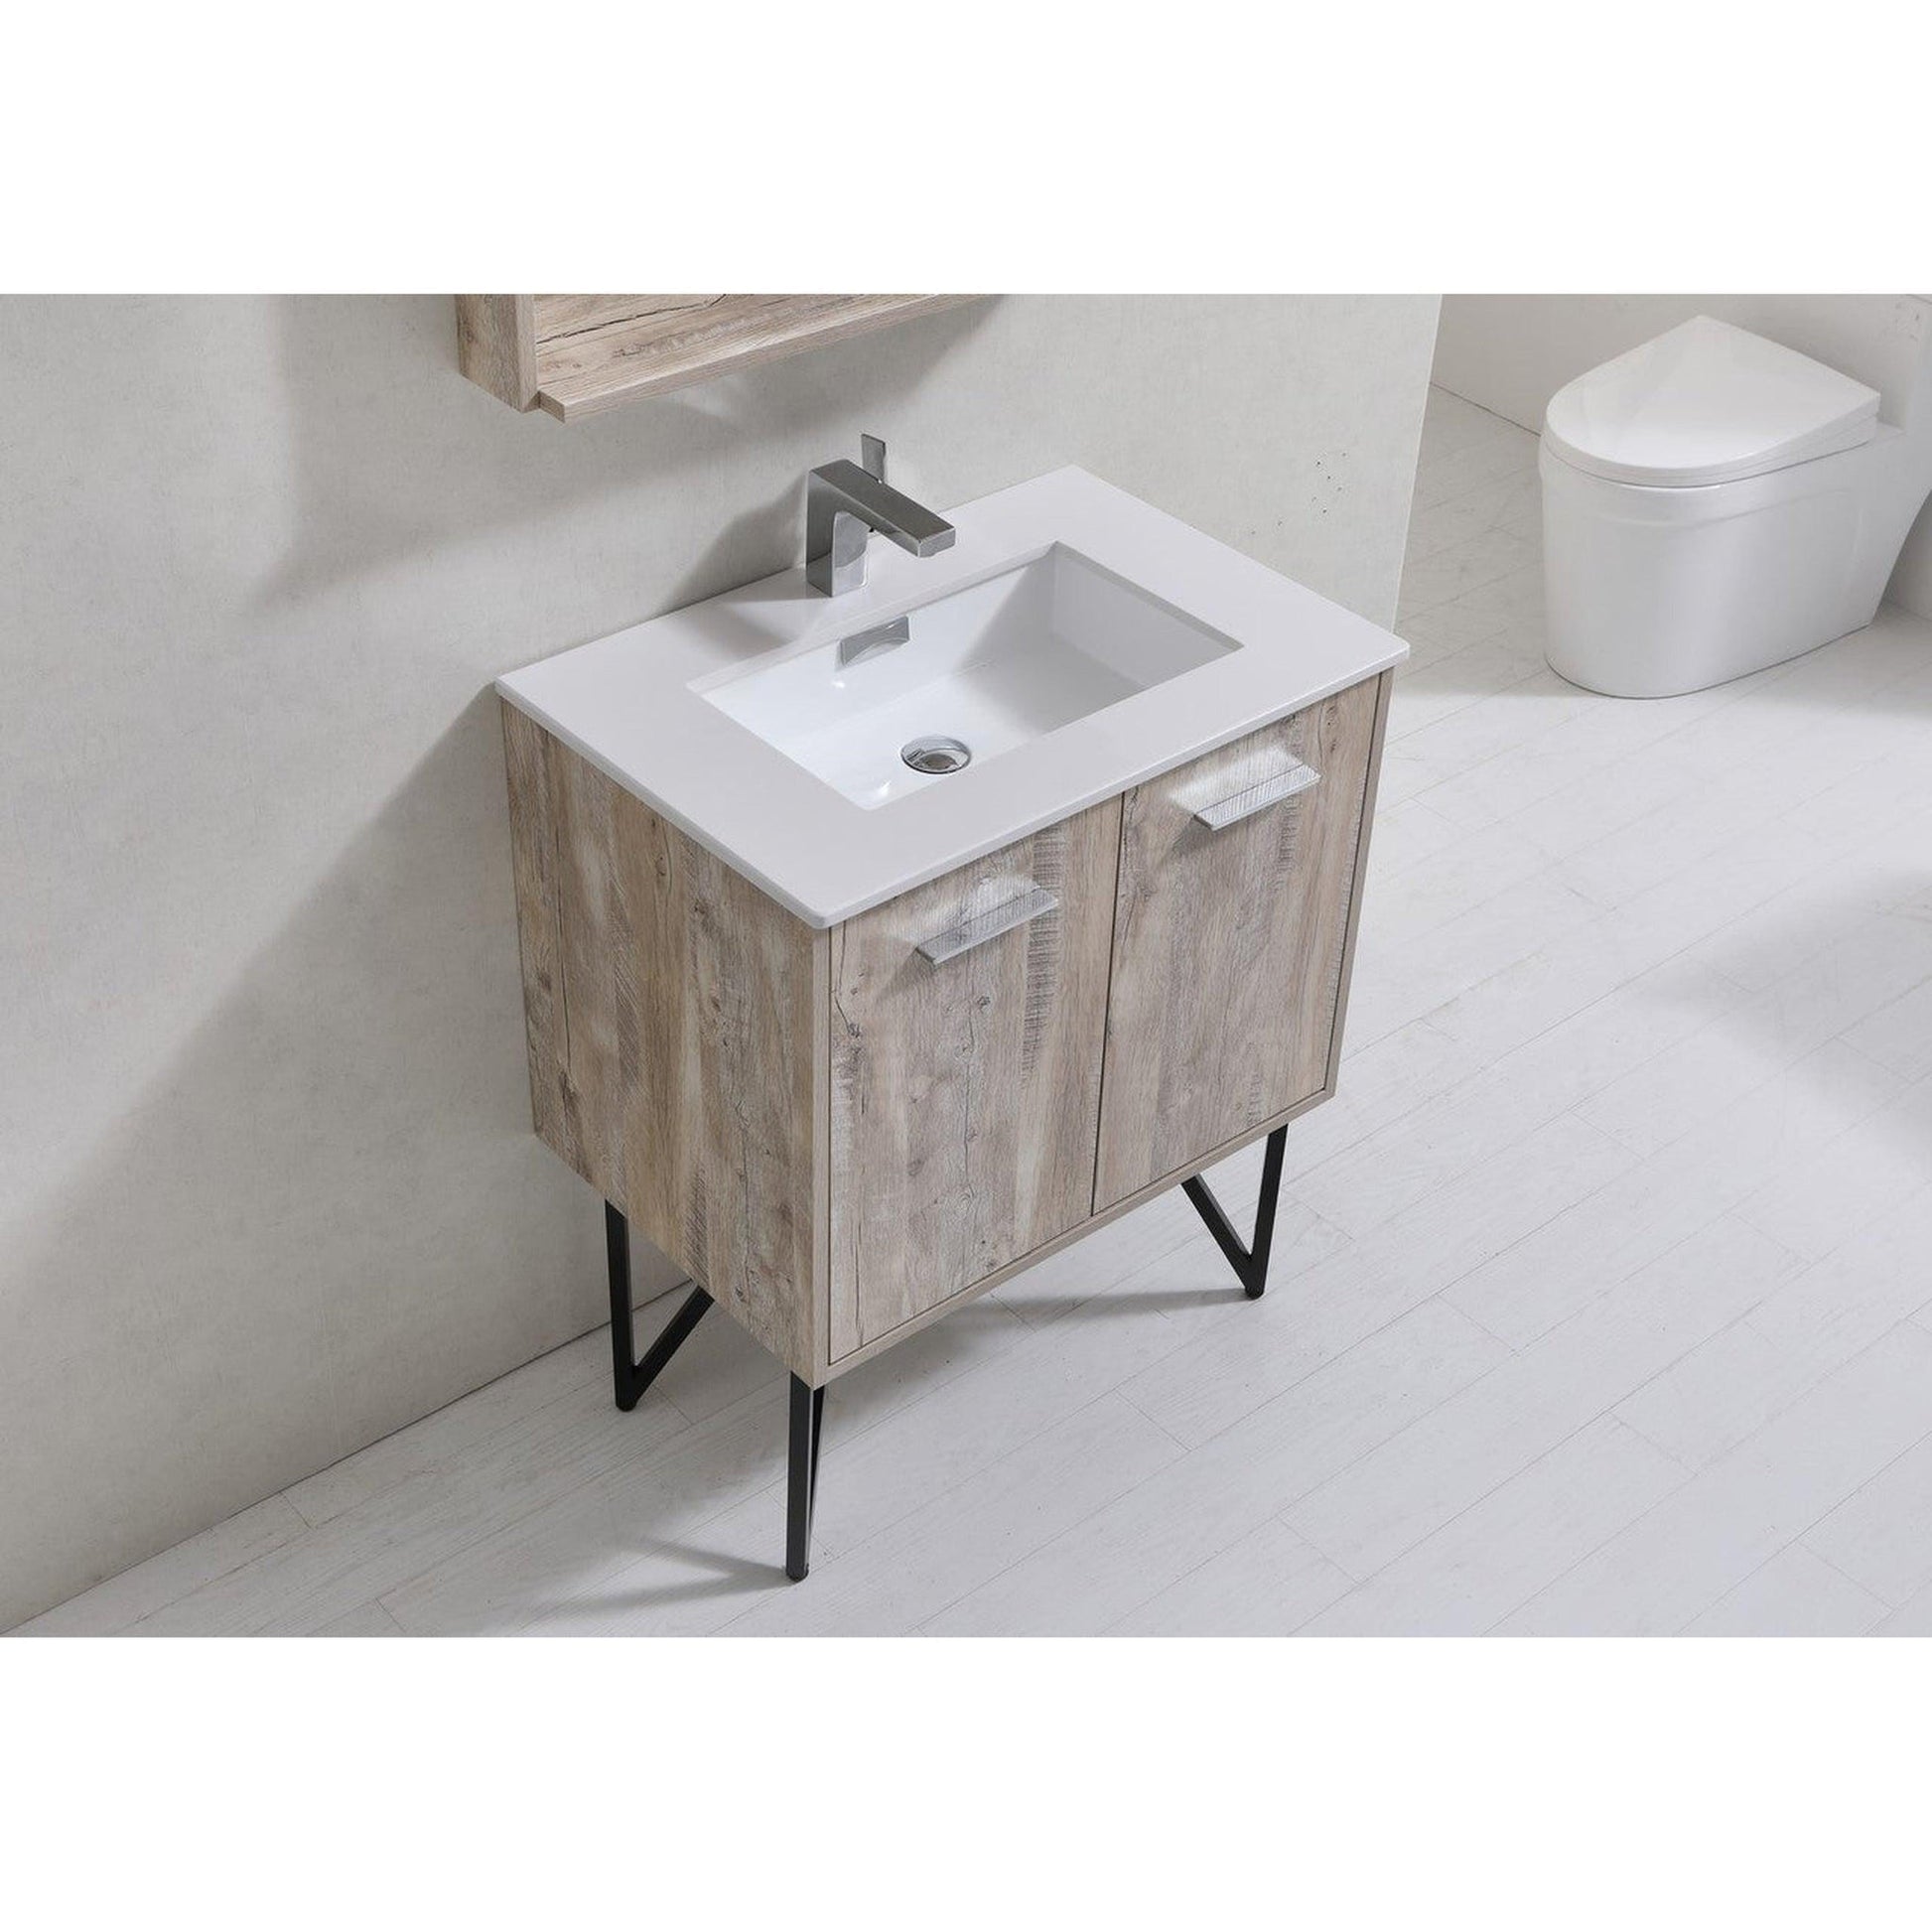 KubeBath Bosco 30" Nature Wood Modern Freestanding Bathroom Vanity With Single Undermount Sink With Overflow and 30" Narure Wood Framed Mirror